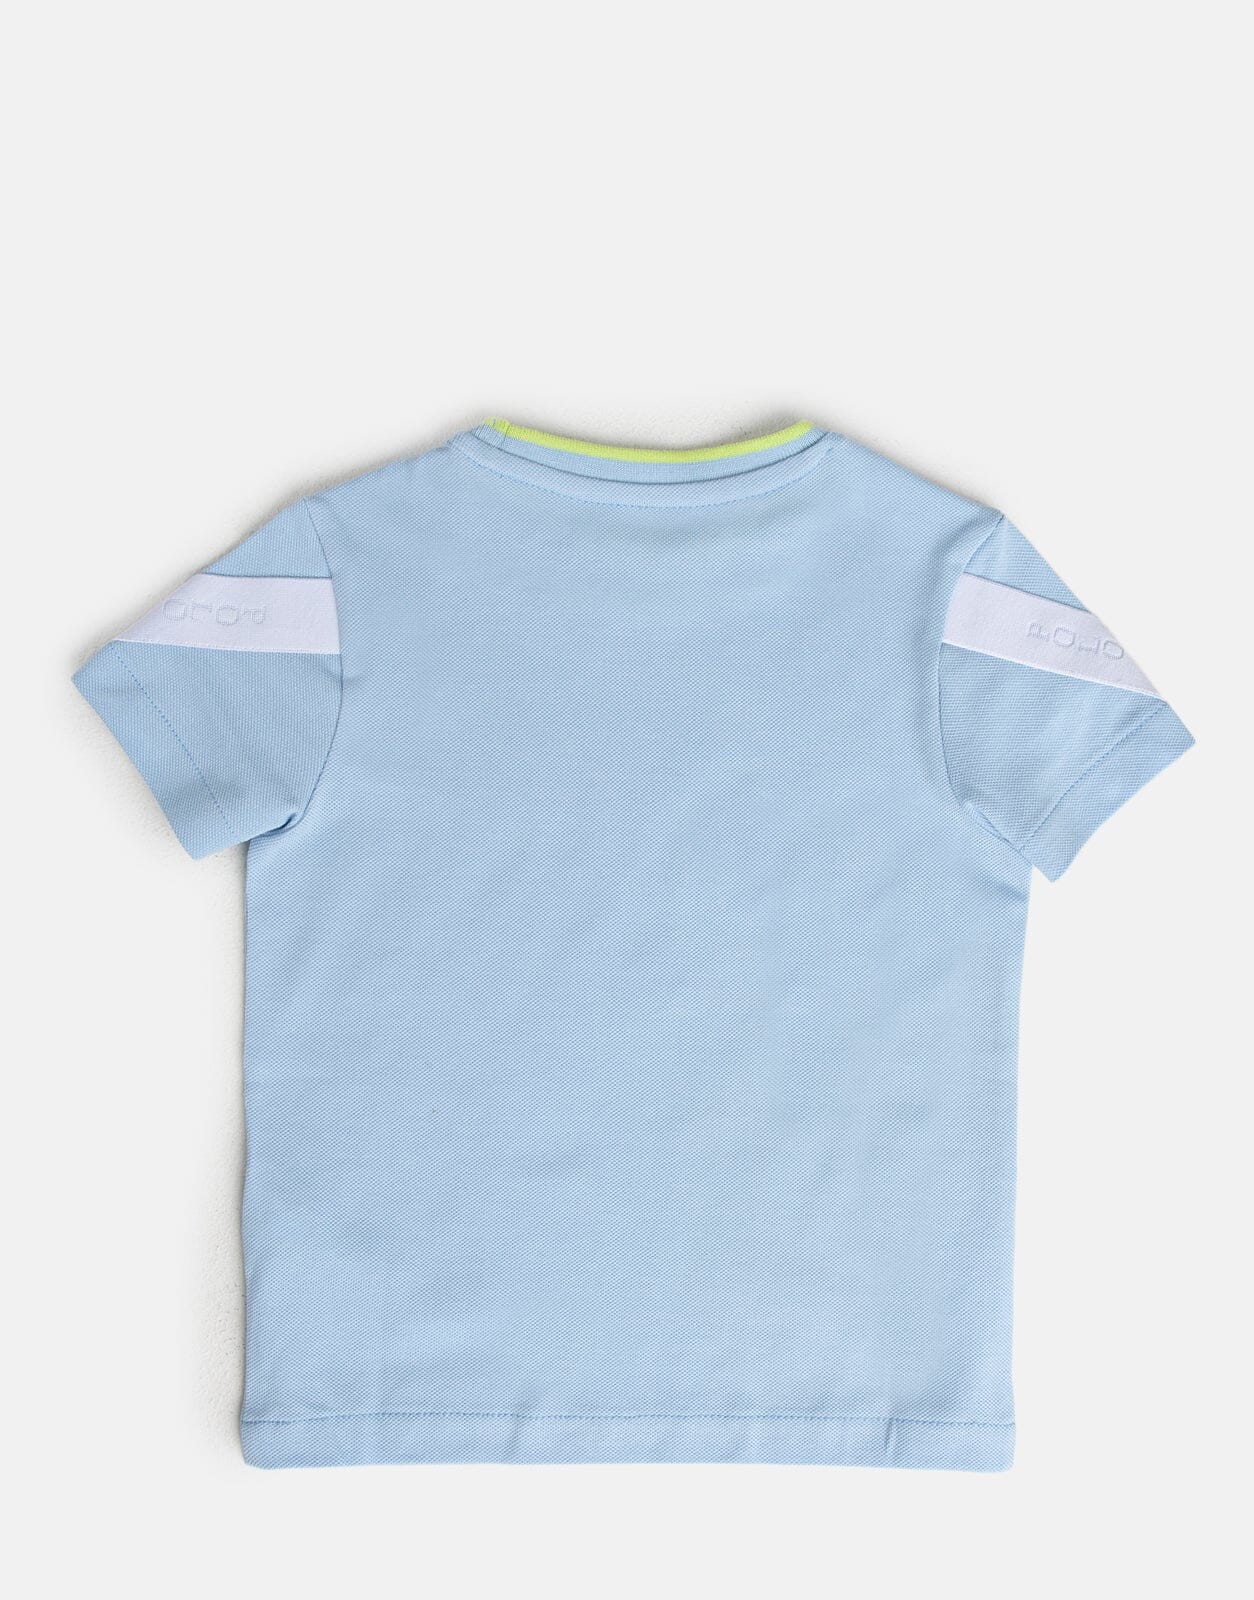 Polo Kids Cody Textured Light Blue T-Shirt - Subwear